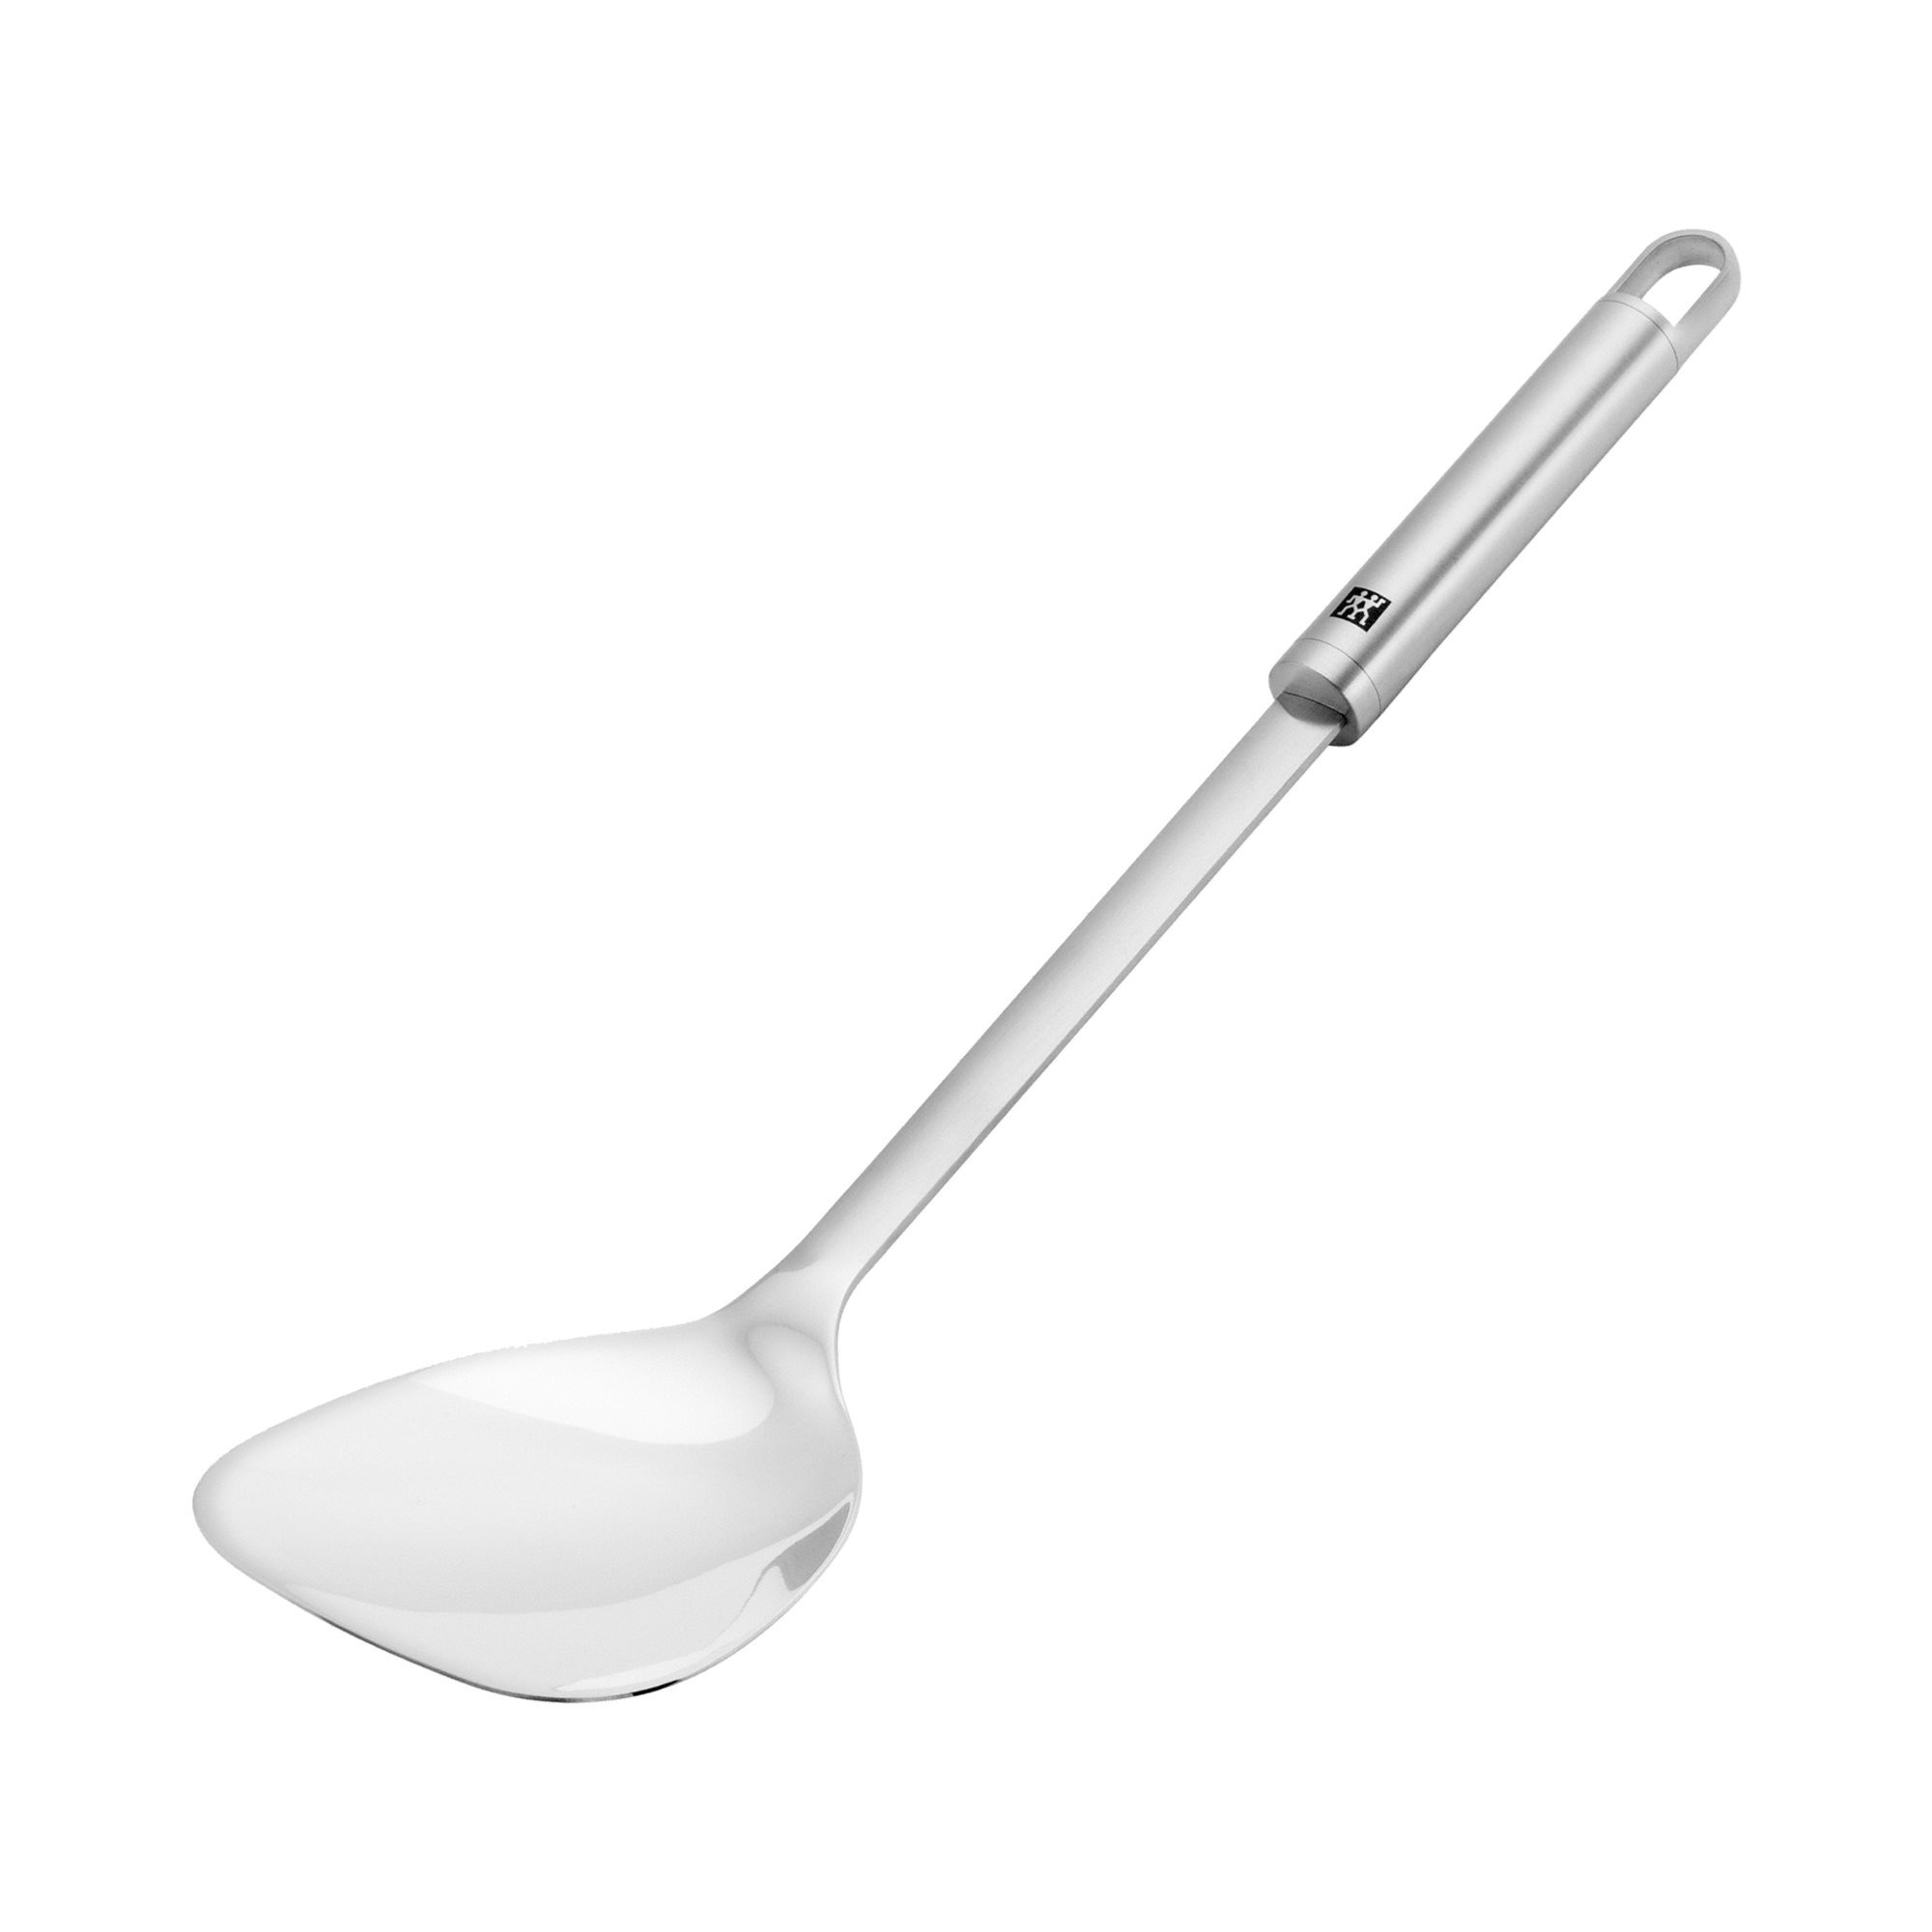 Pro Spatula Spoon